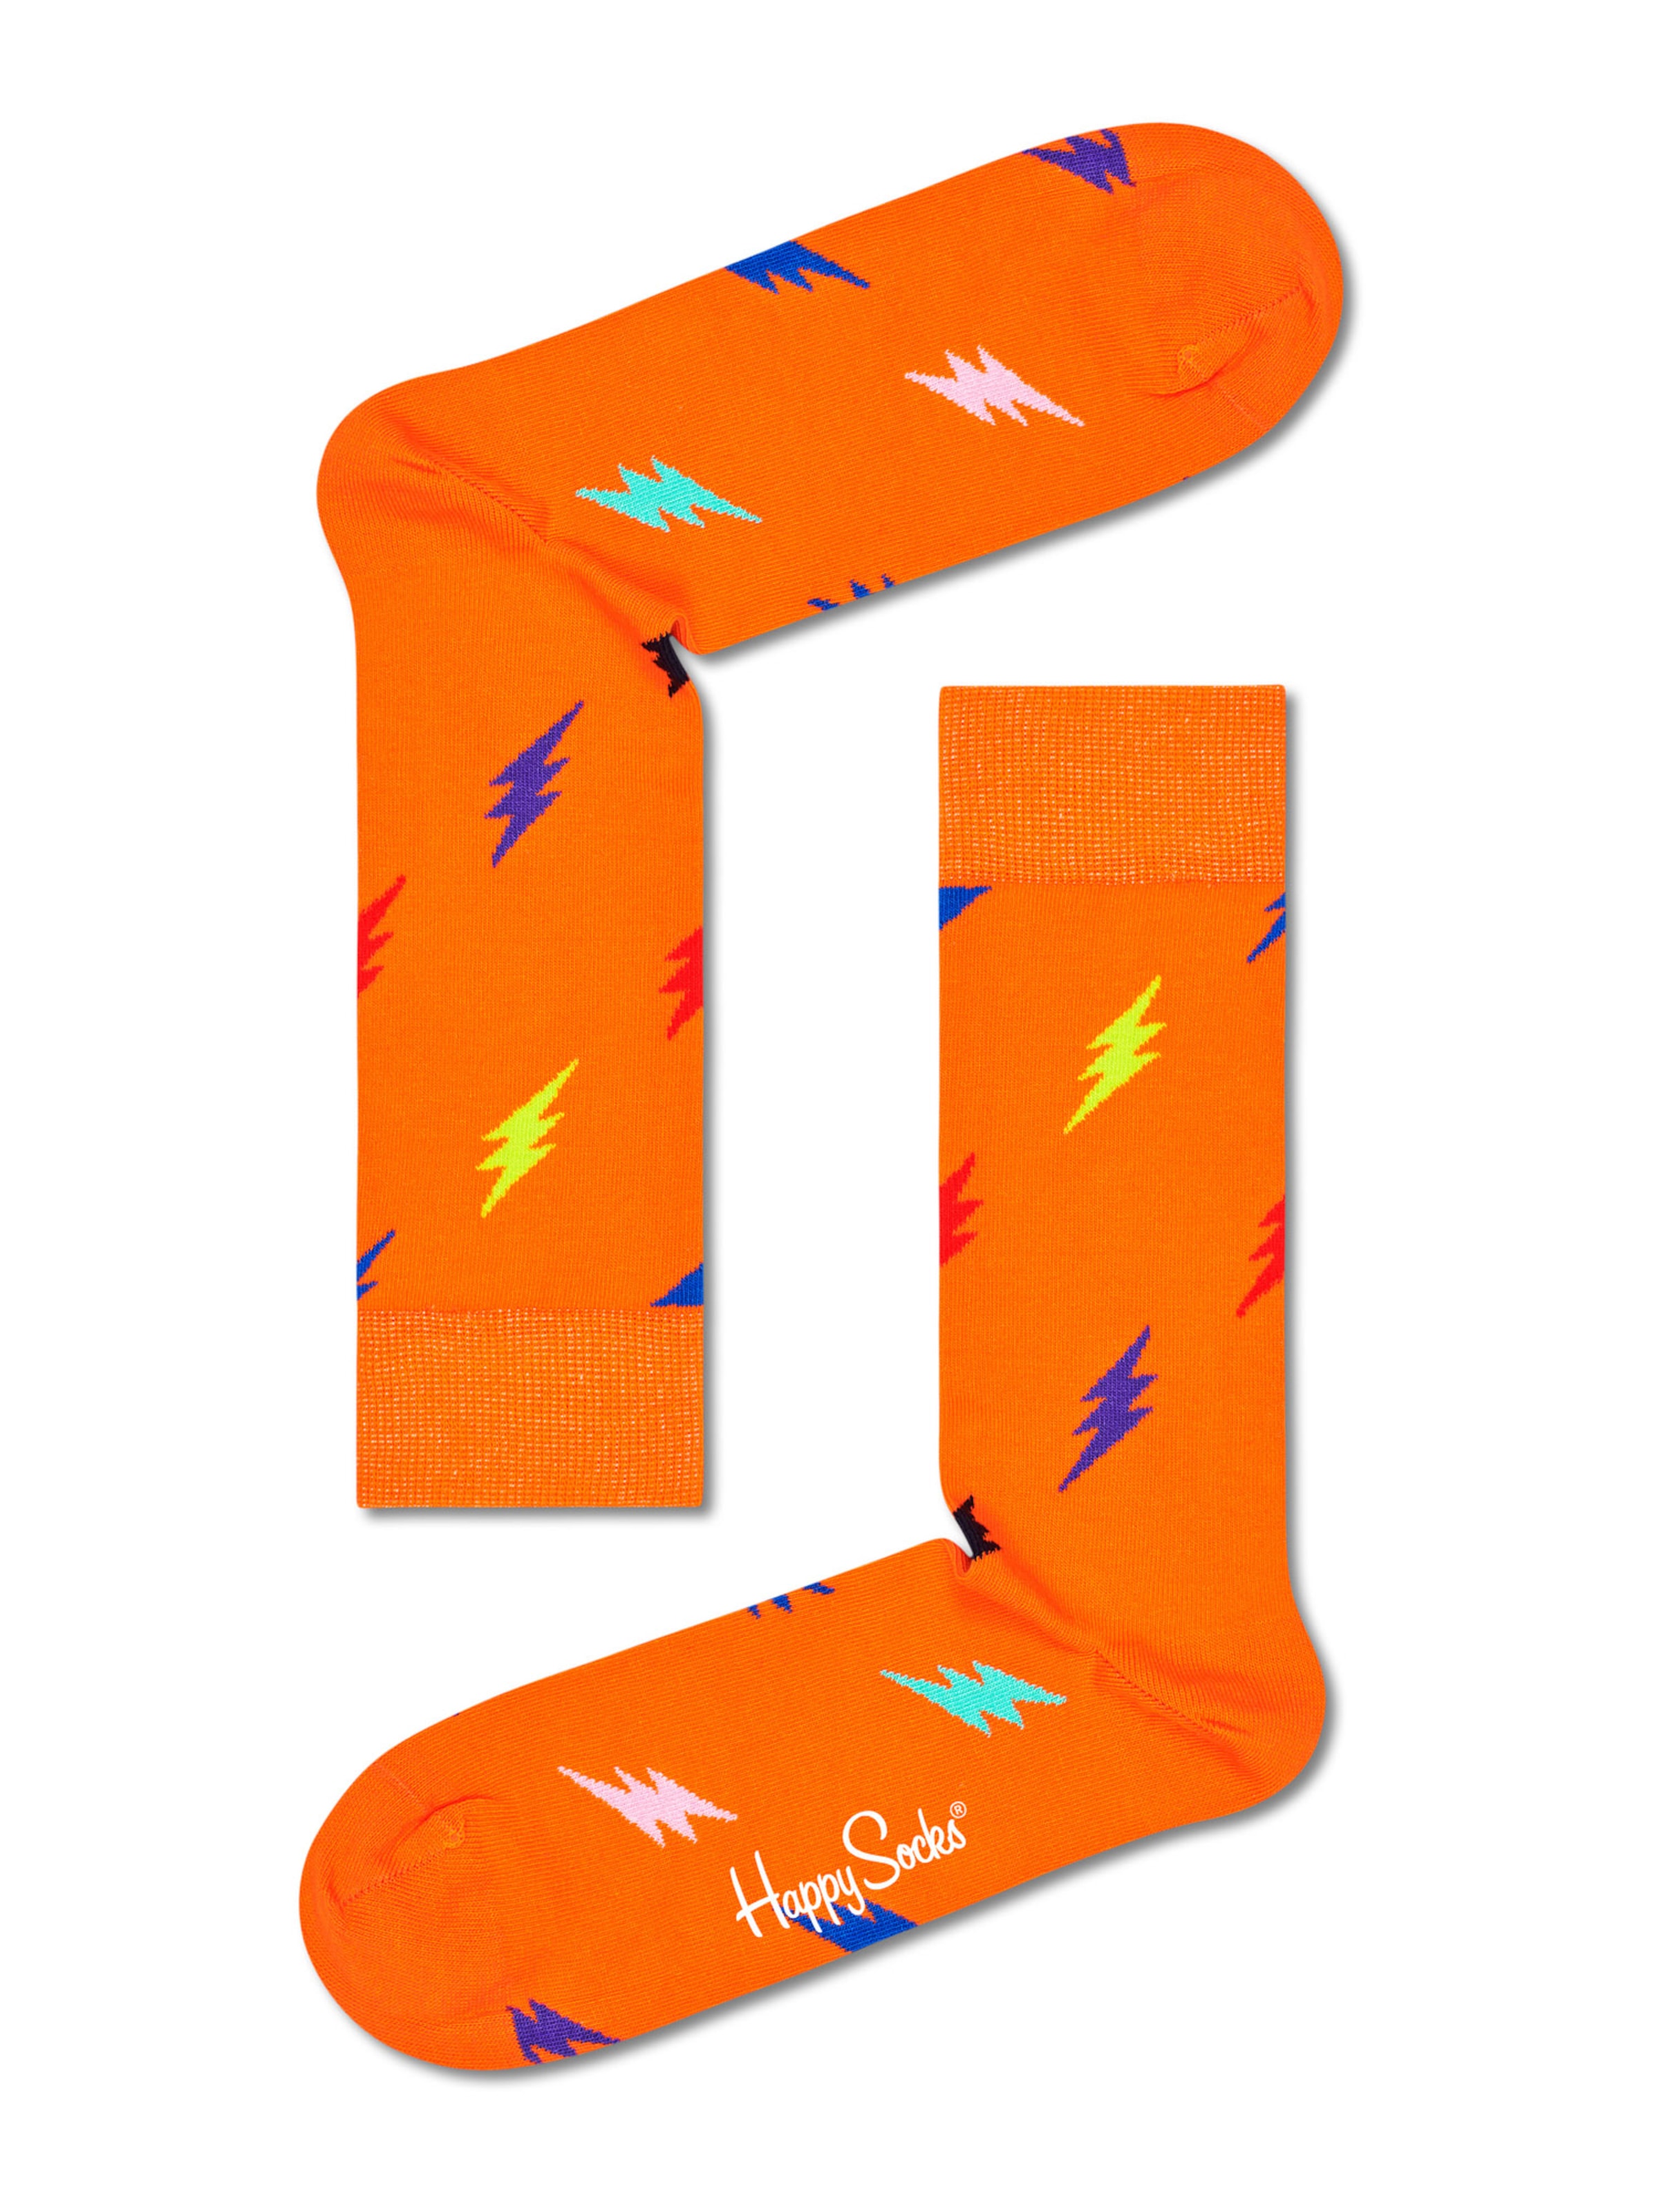 JIx8q Nuovi arrivi Happy Socks Calzino Lightning in Arancione Scuro 